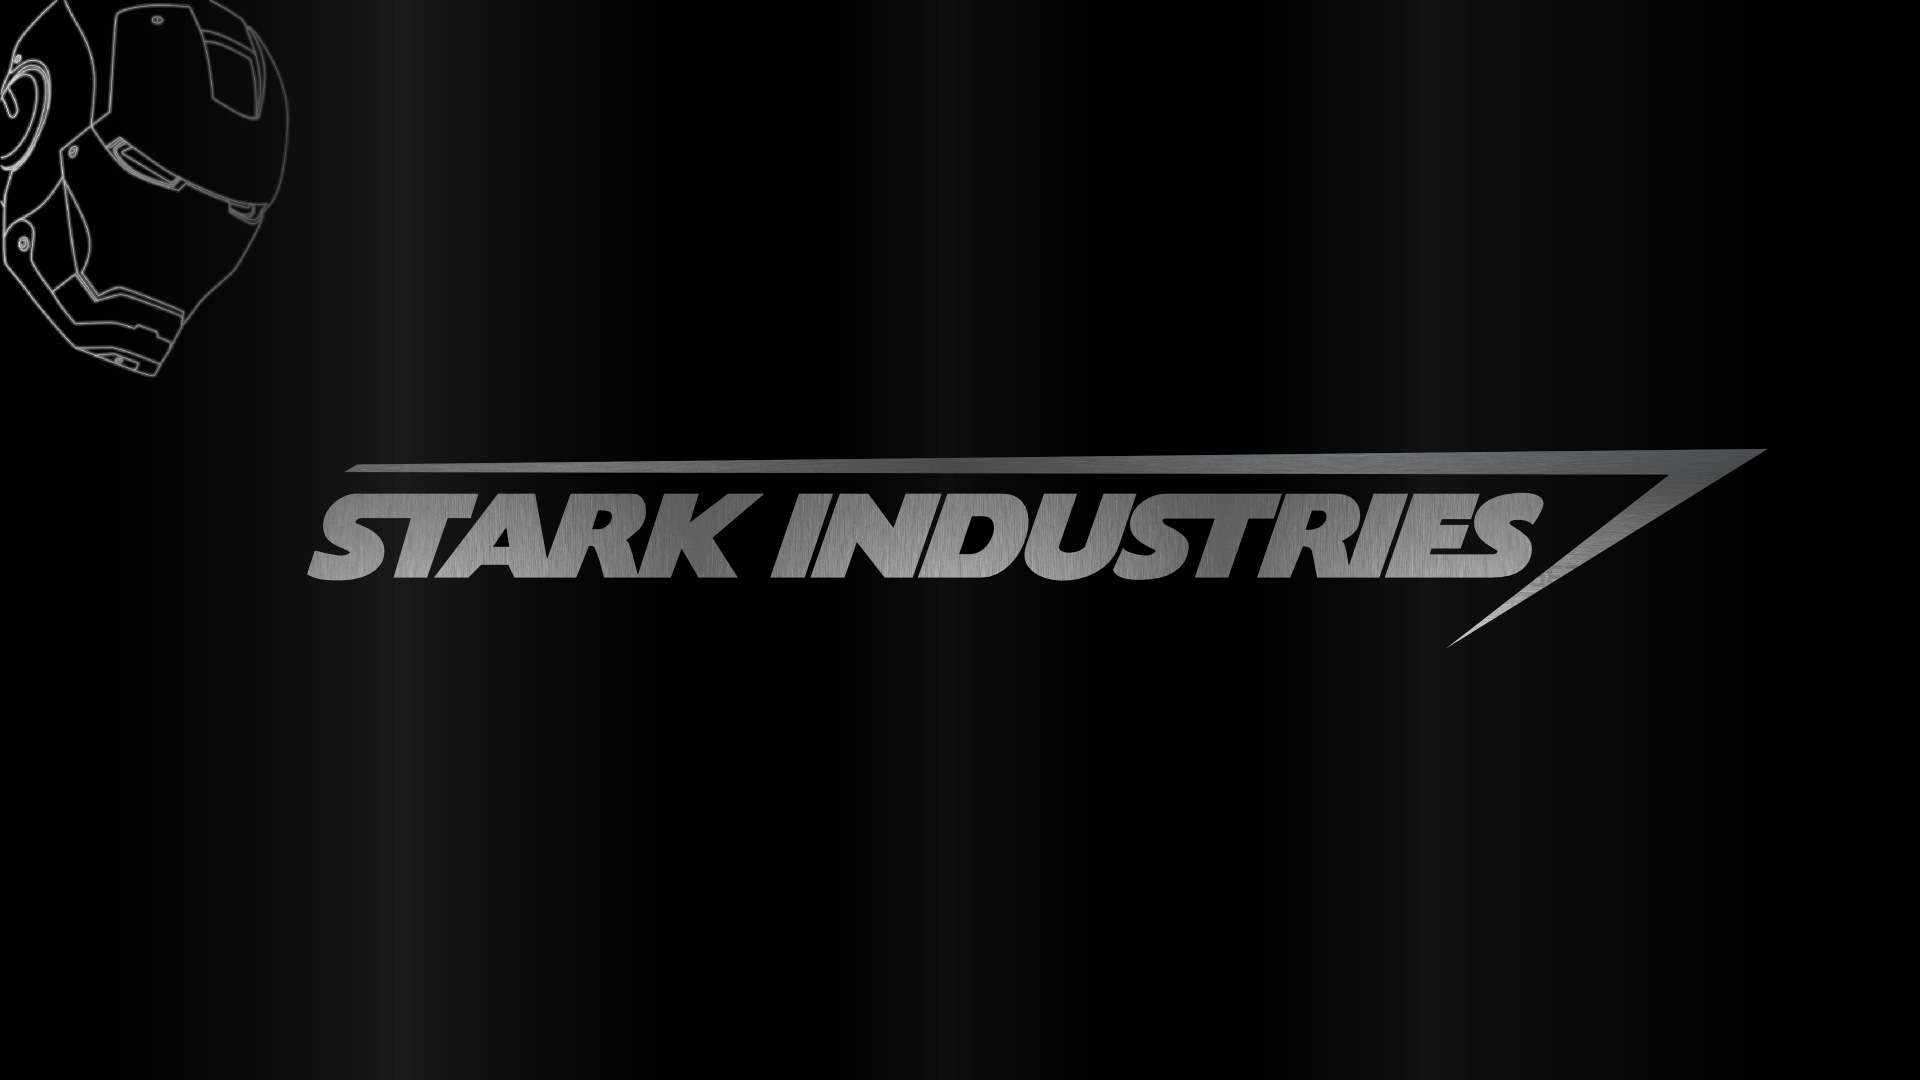 Stark Industries Wallpaper. Stark Industries Wallpaper, Tony Stark Wallpaper and Bleach Stark Wallpaper